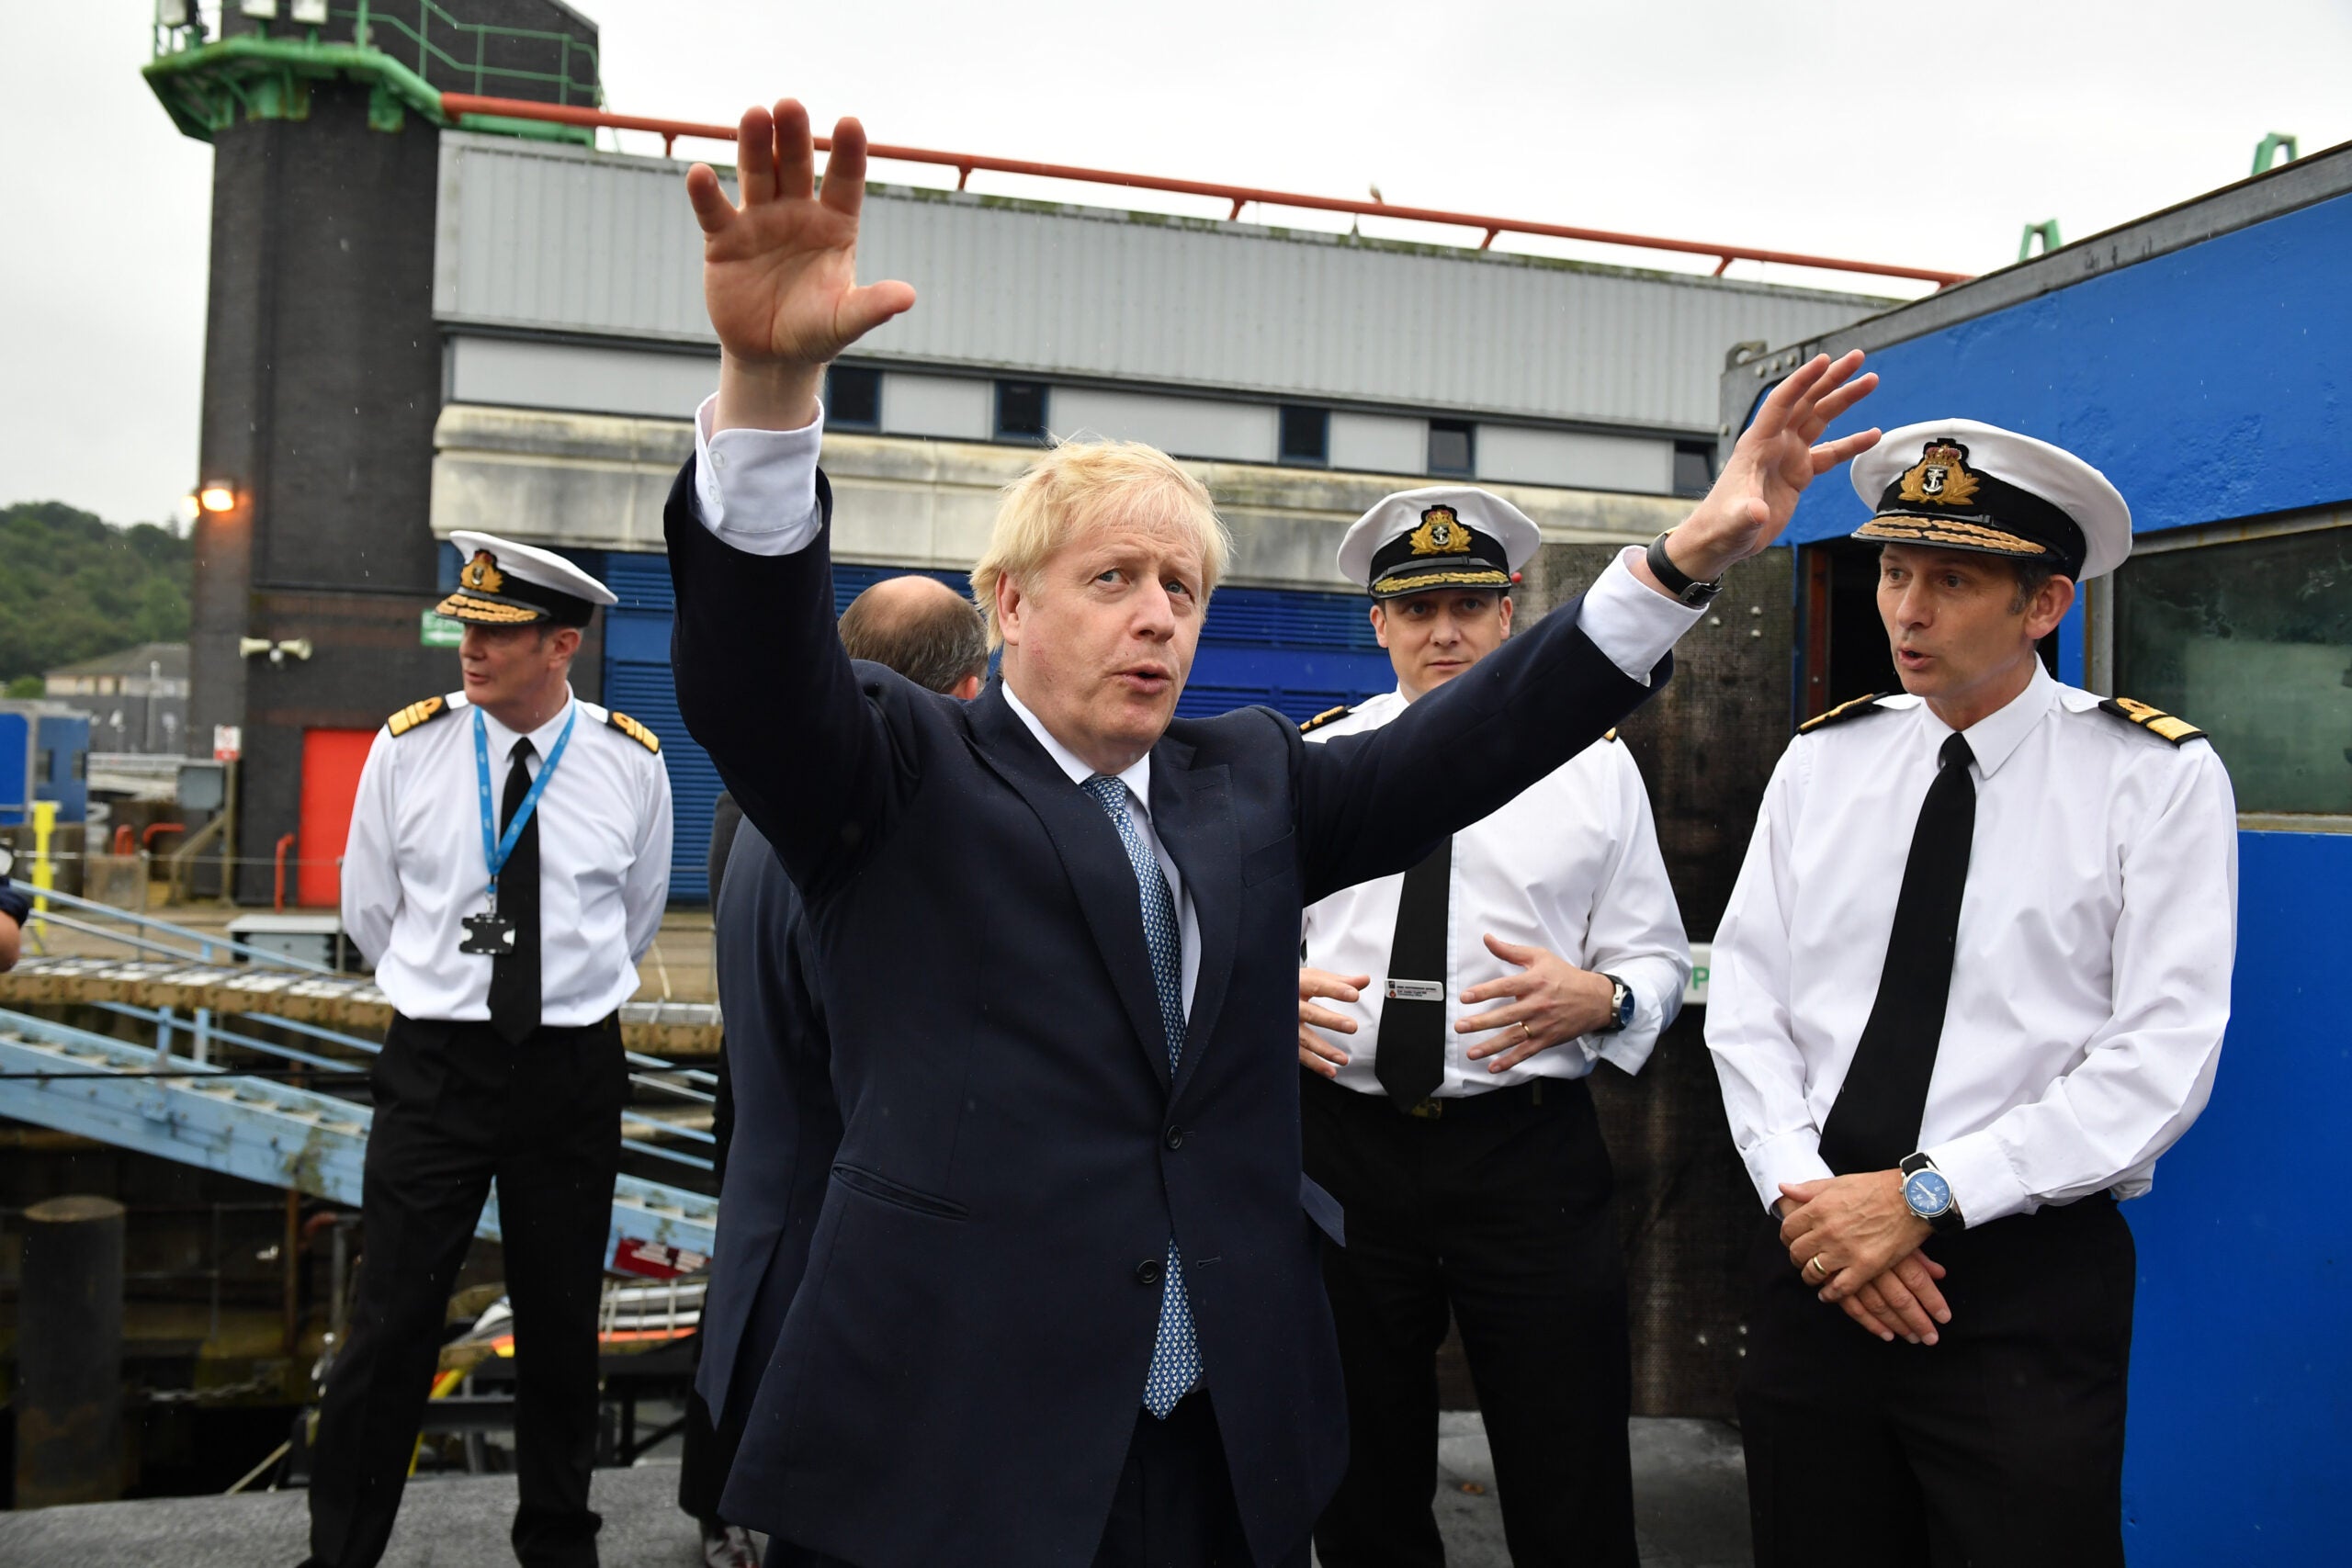 Seven times politicians were booed (almost) as much as Boris Johnson